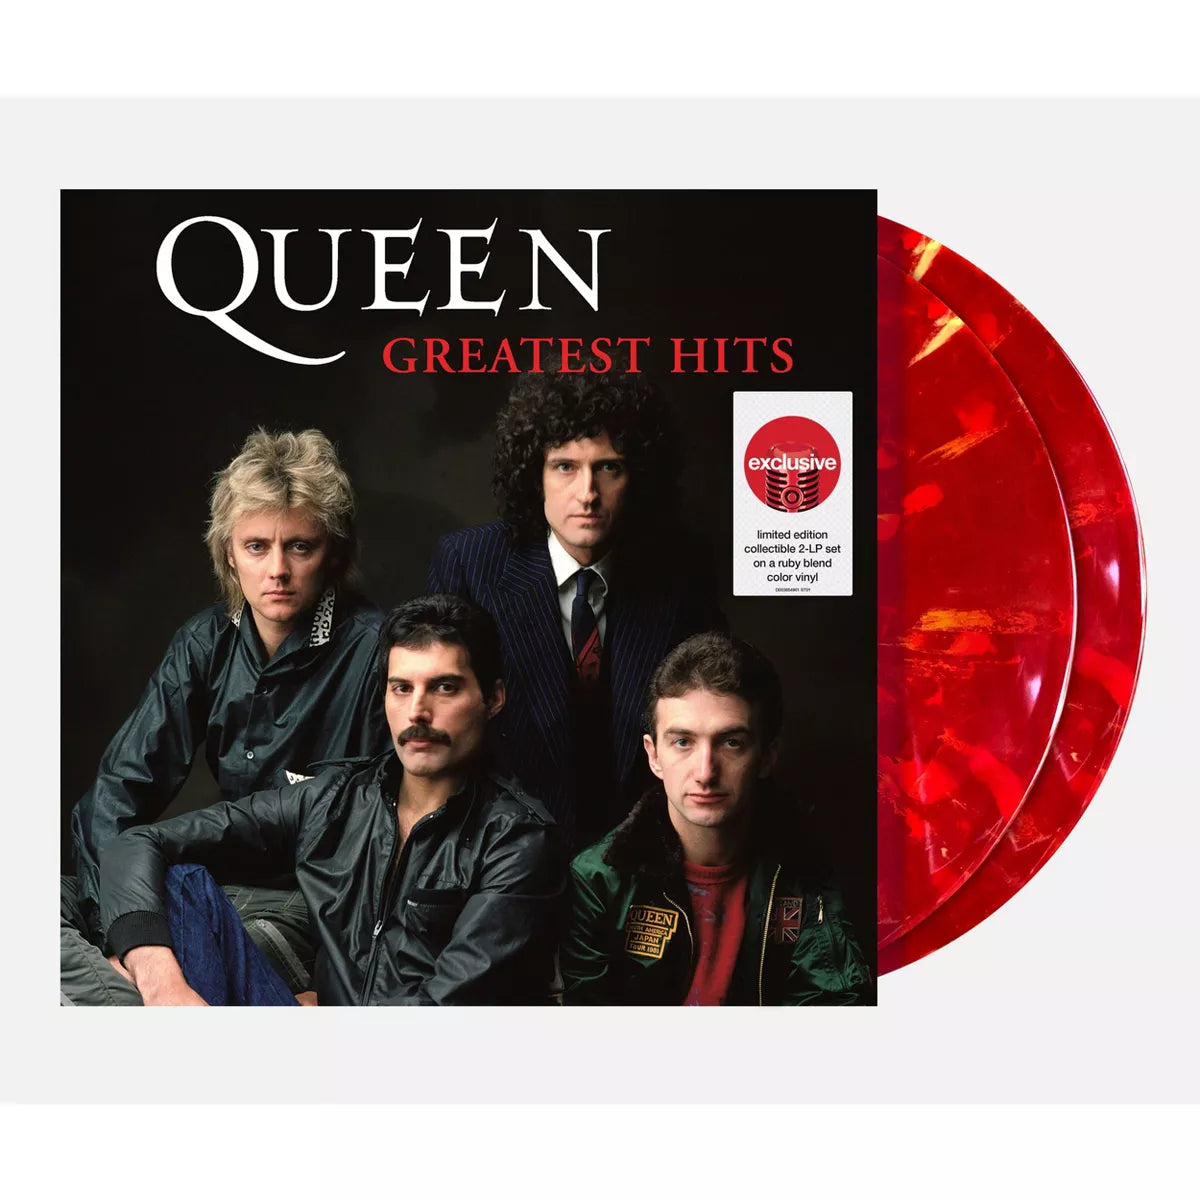 Queen greatest hits vinyl record